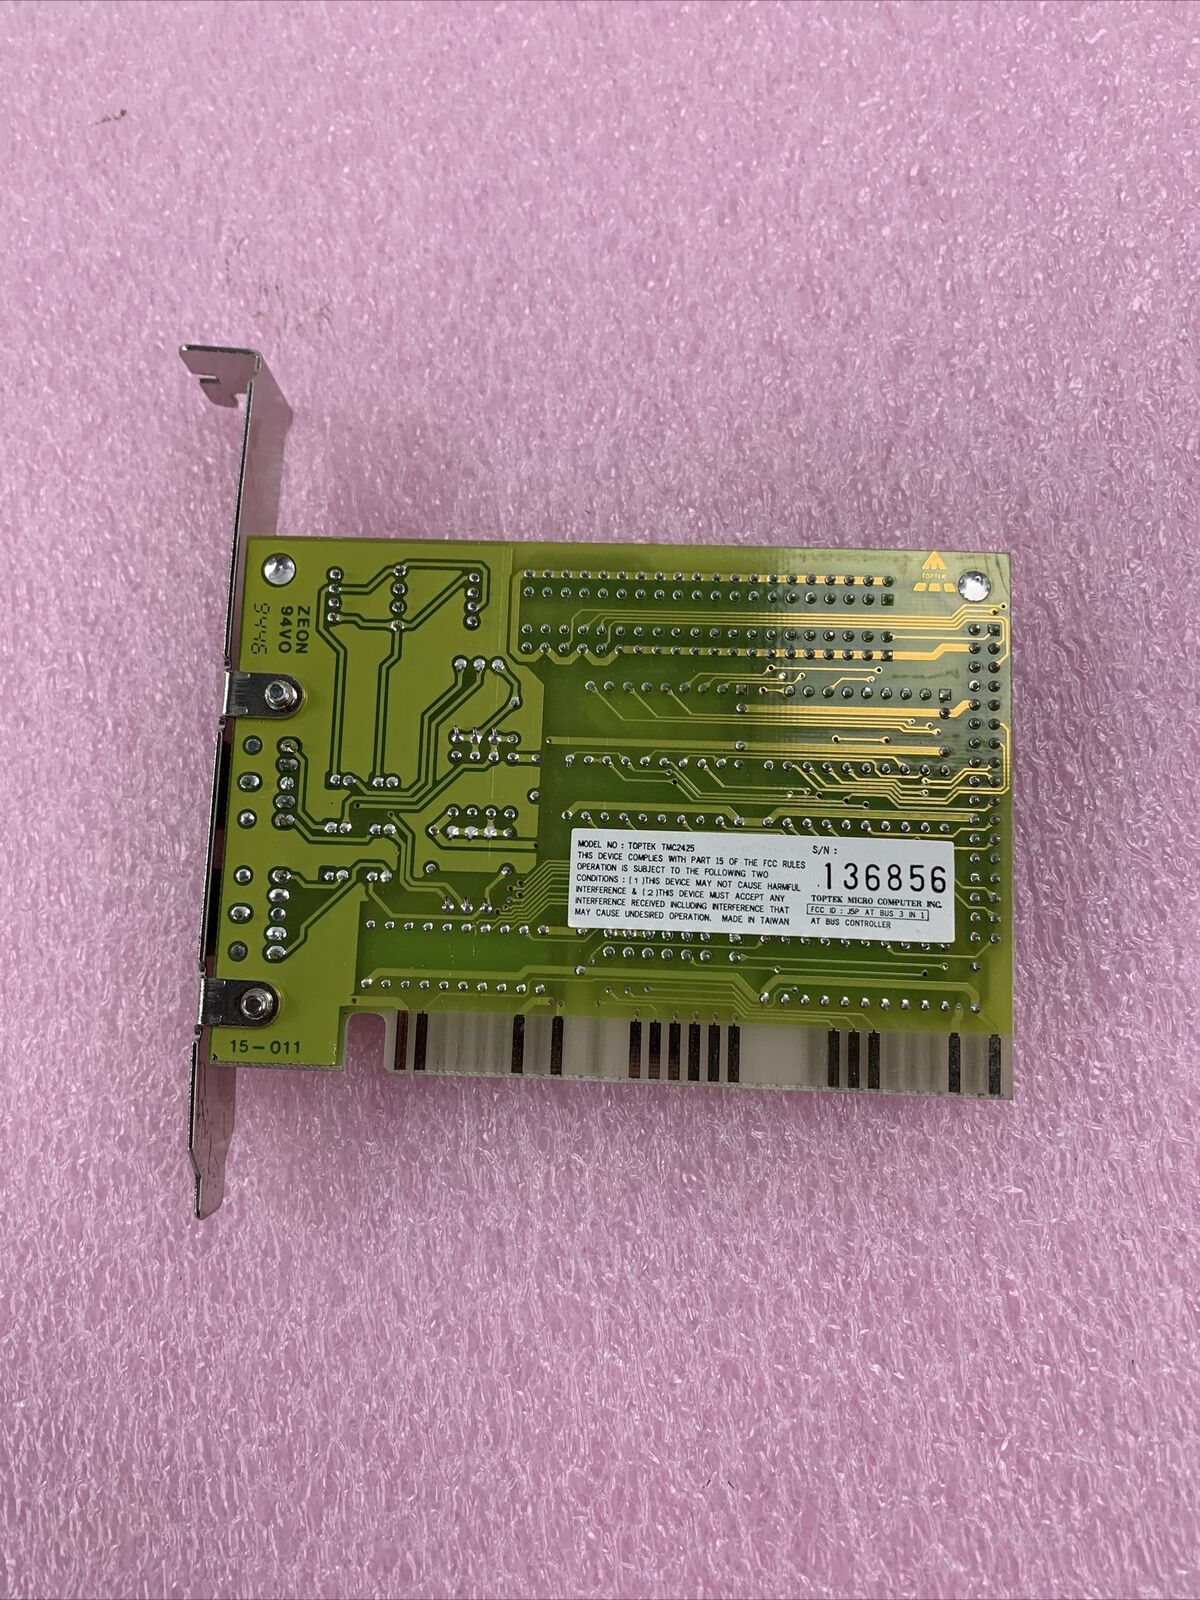 Toptek Micro Computers valled golden Sound Card Ver 3